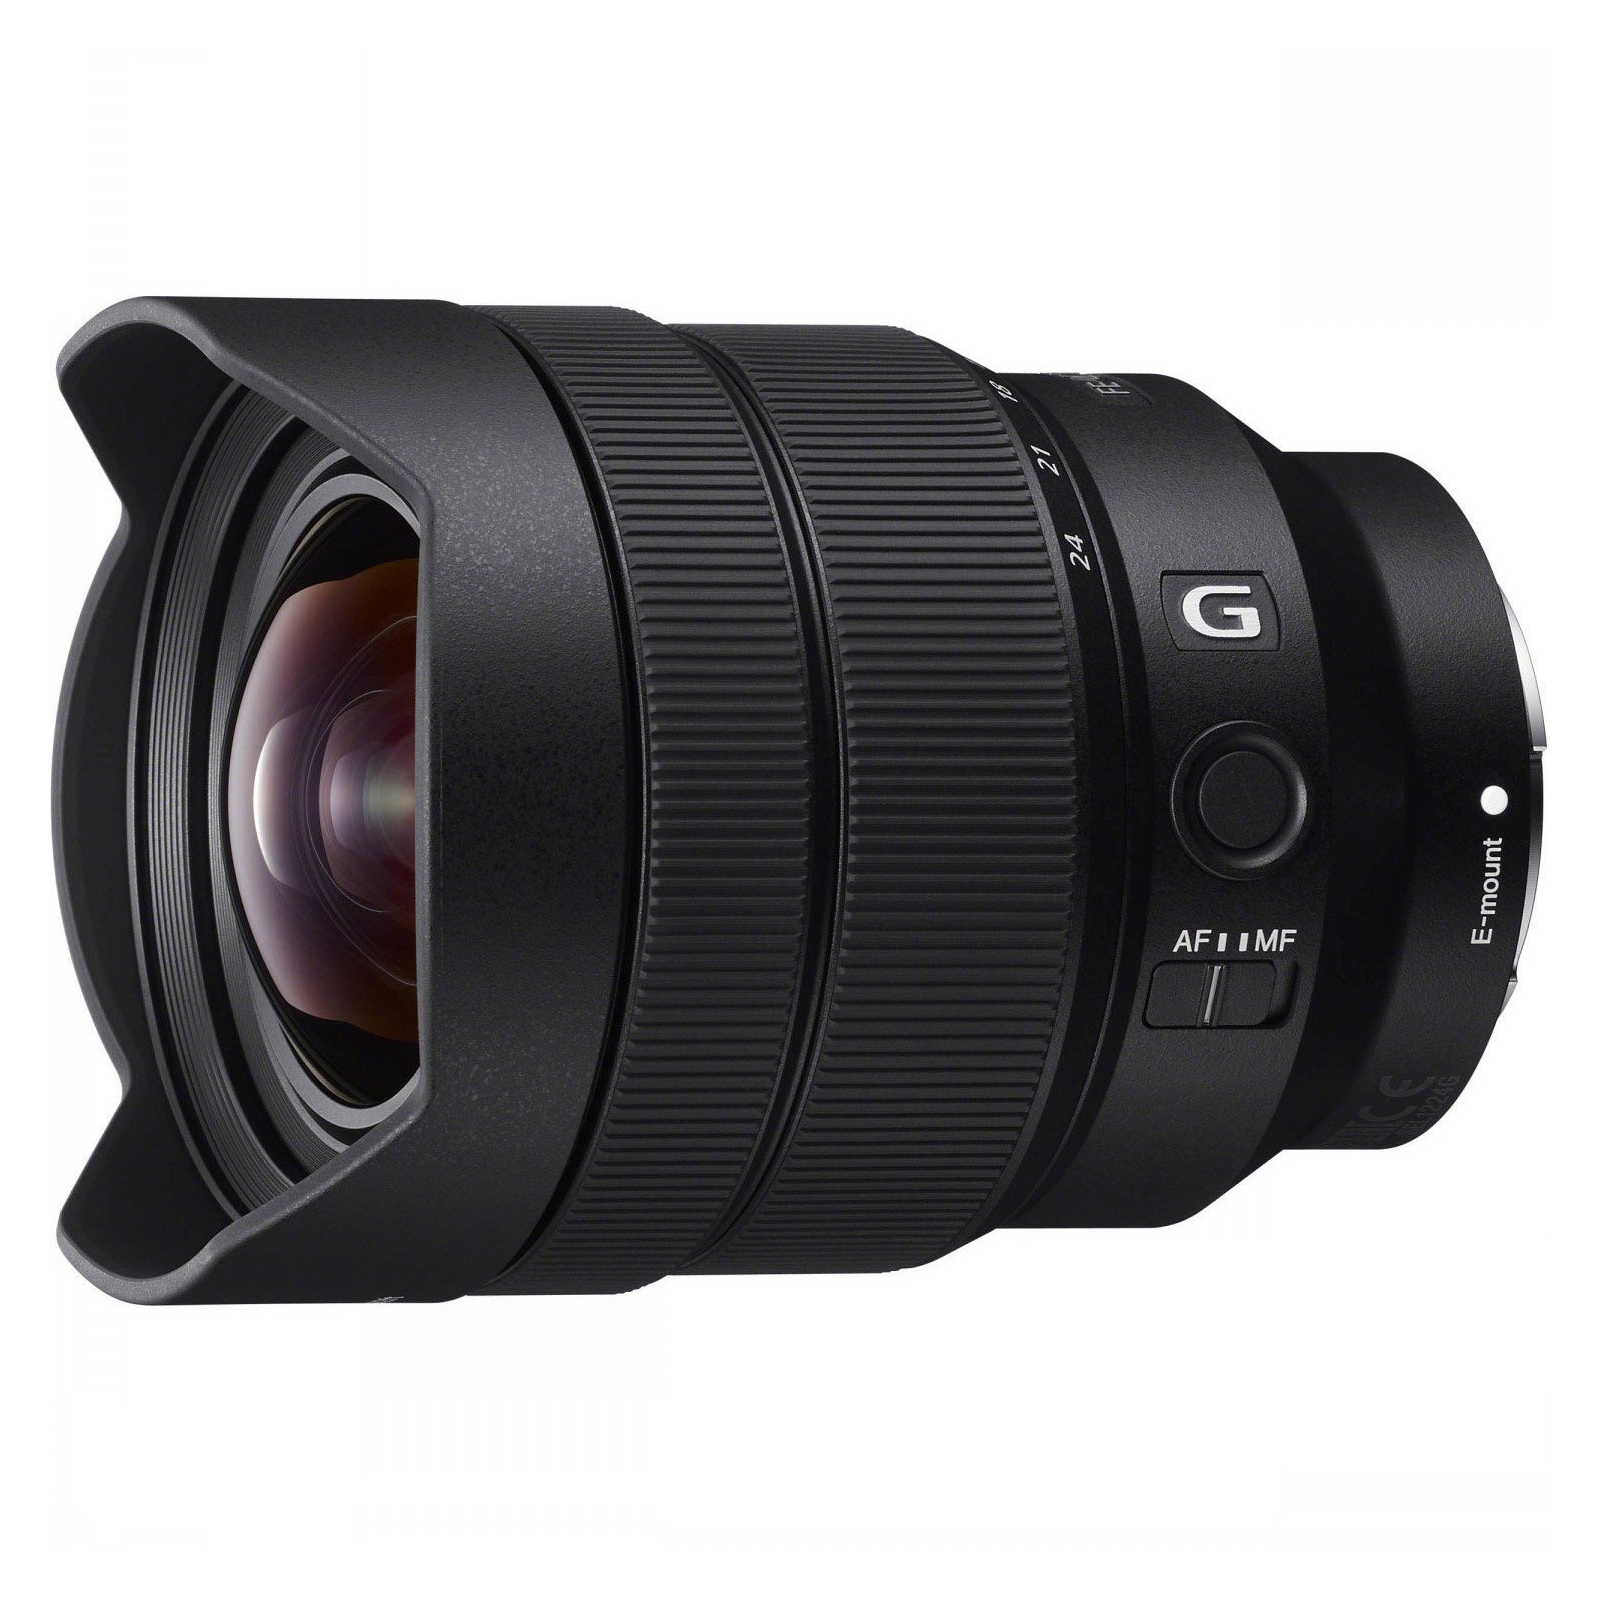 Об'єктив Sony 12-24mm, f/4.0 G для камер NEX FF (SEL1224G.SYX) зображення 2